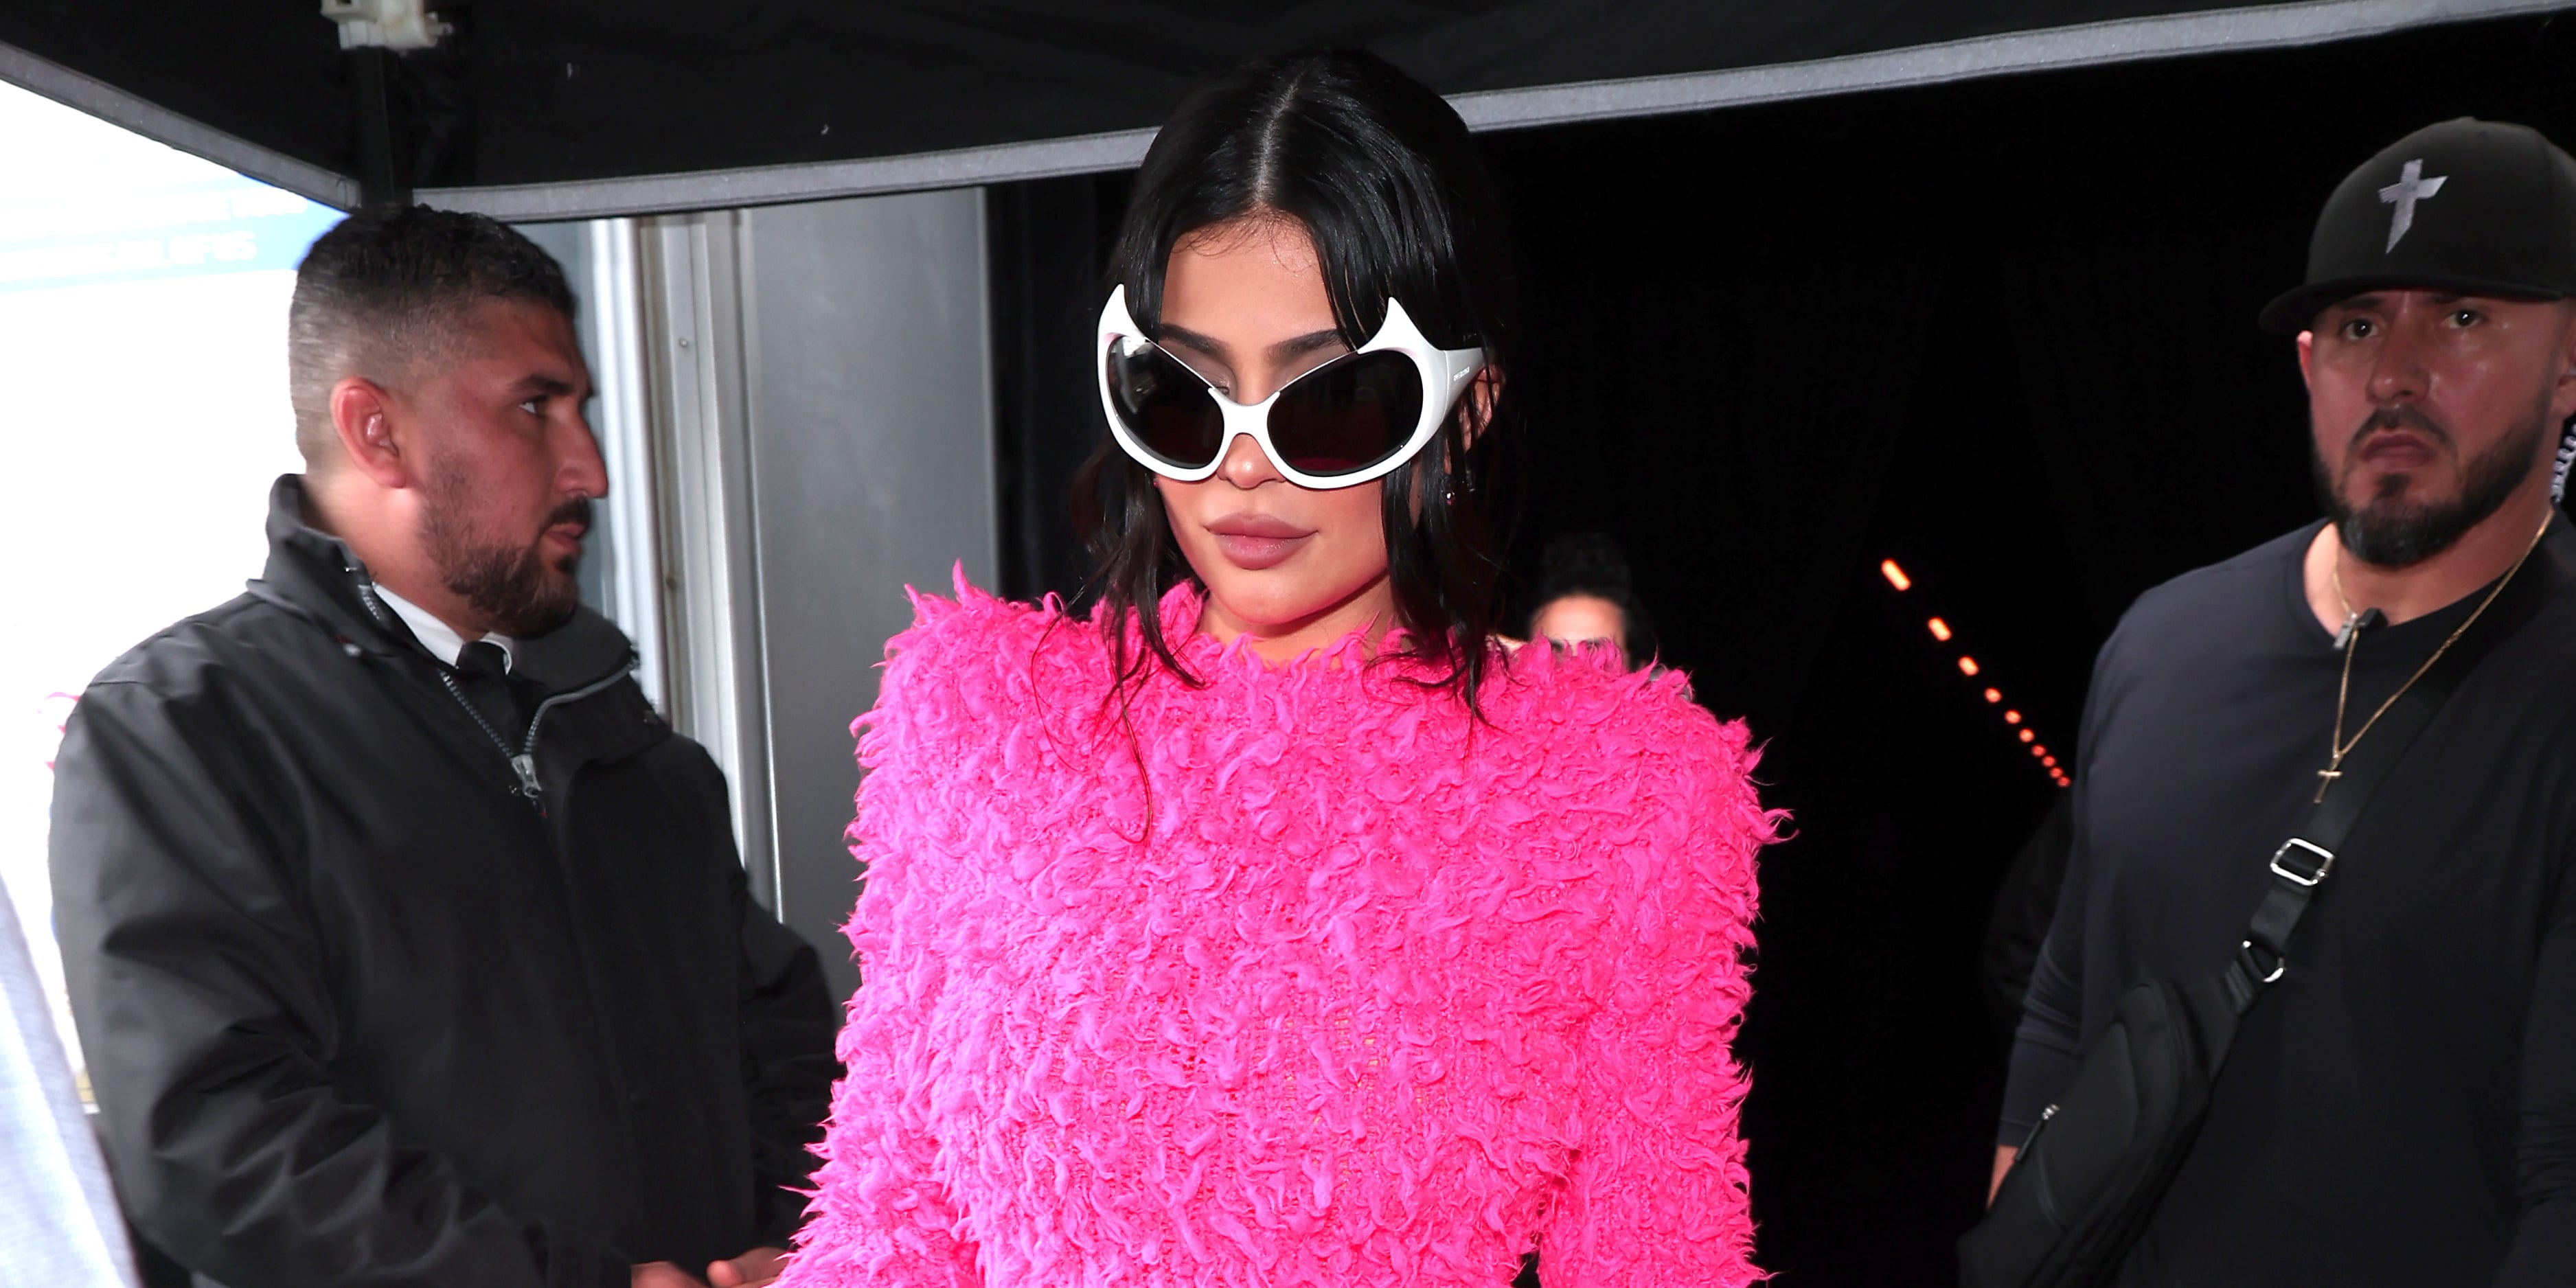 Kylie Jenner's Pink Balenciaga Dress at Paris Fashion Week